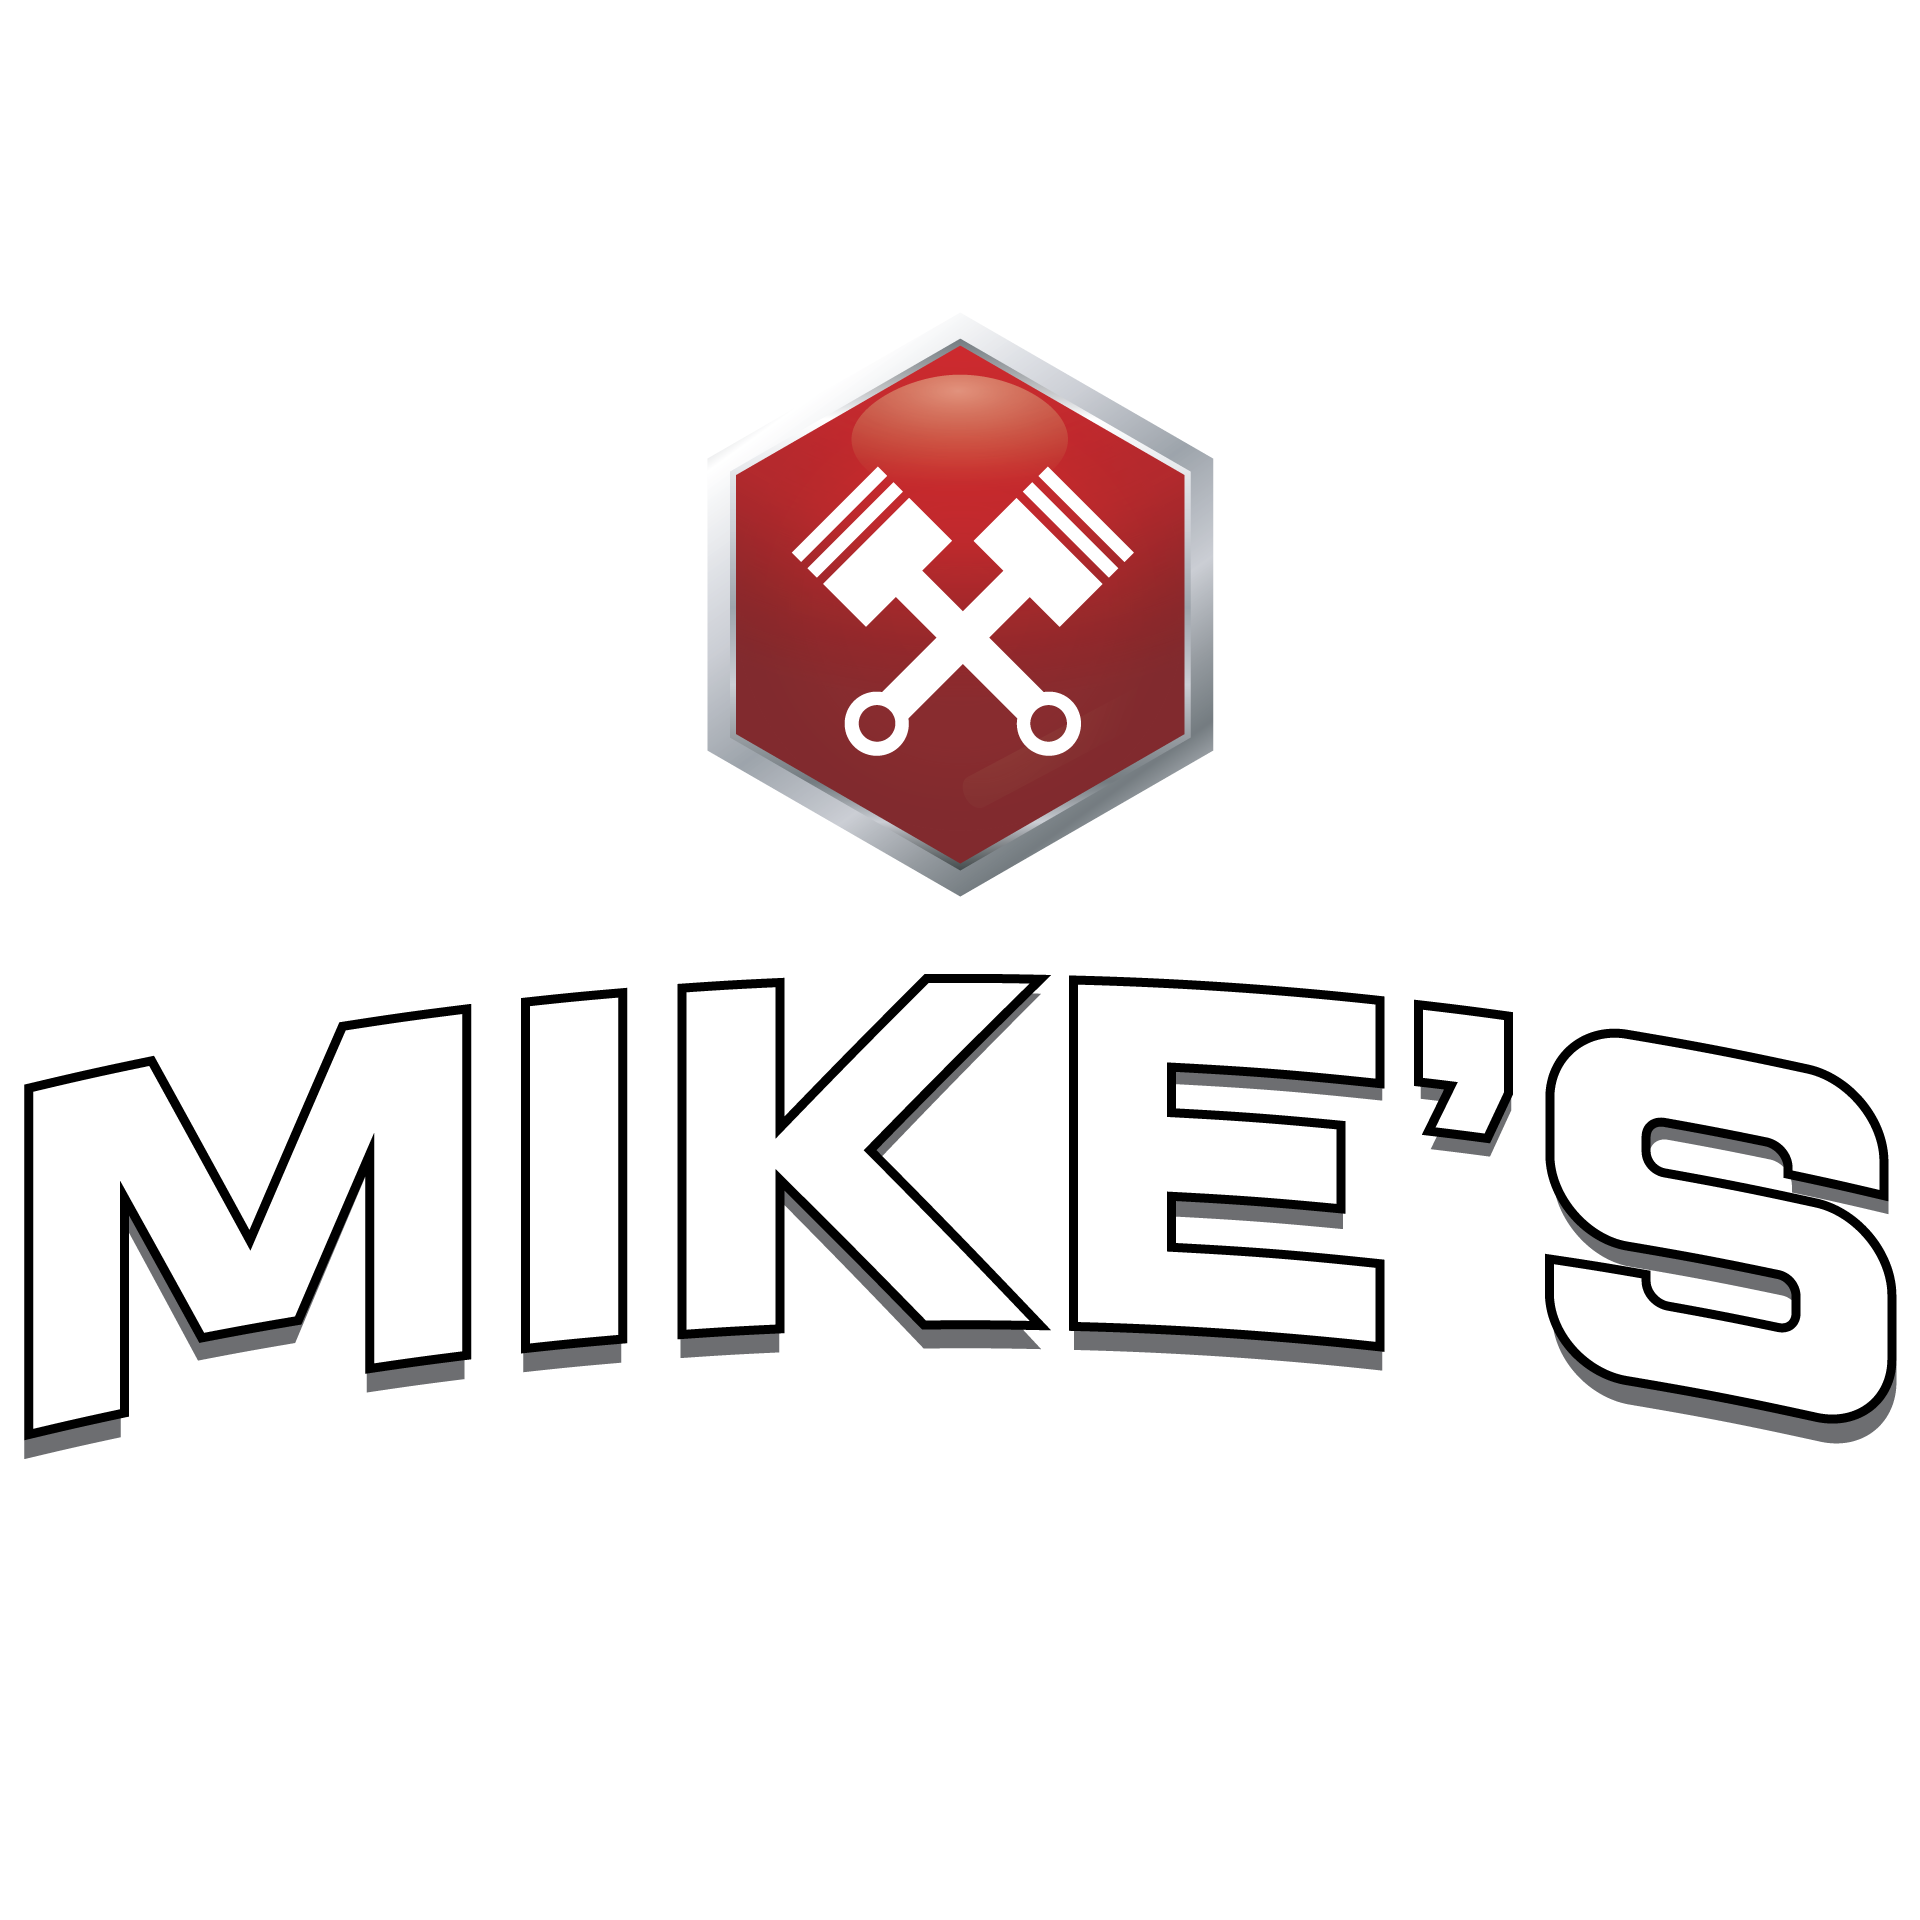 Mike's Mobile Automotive Logo